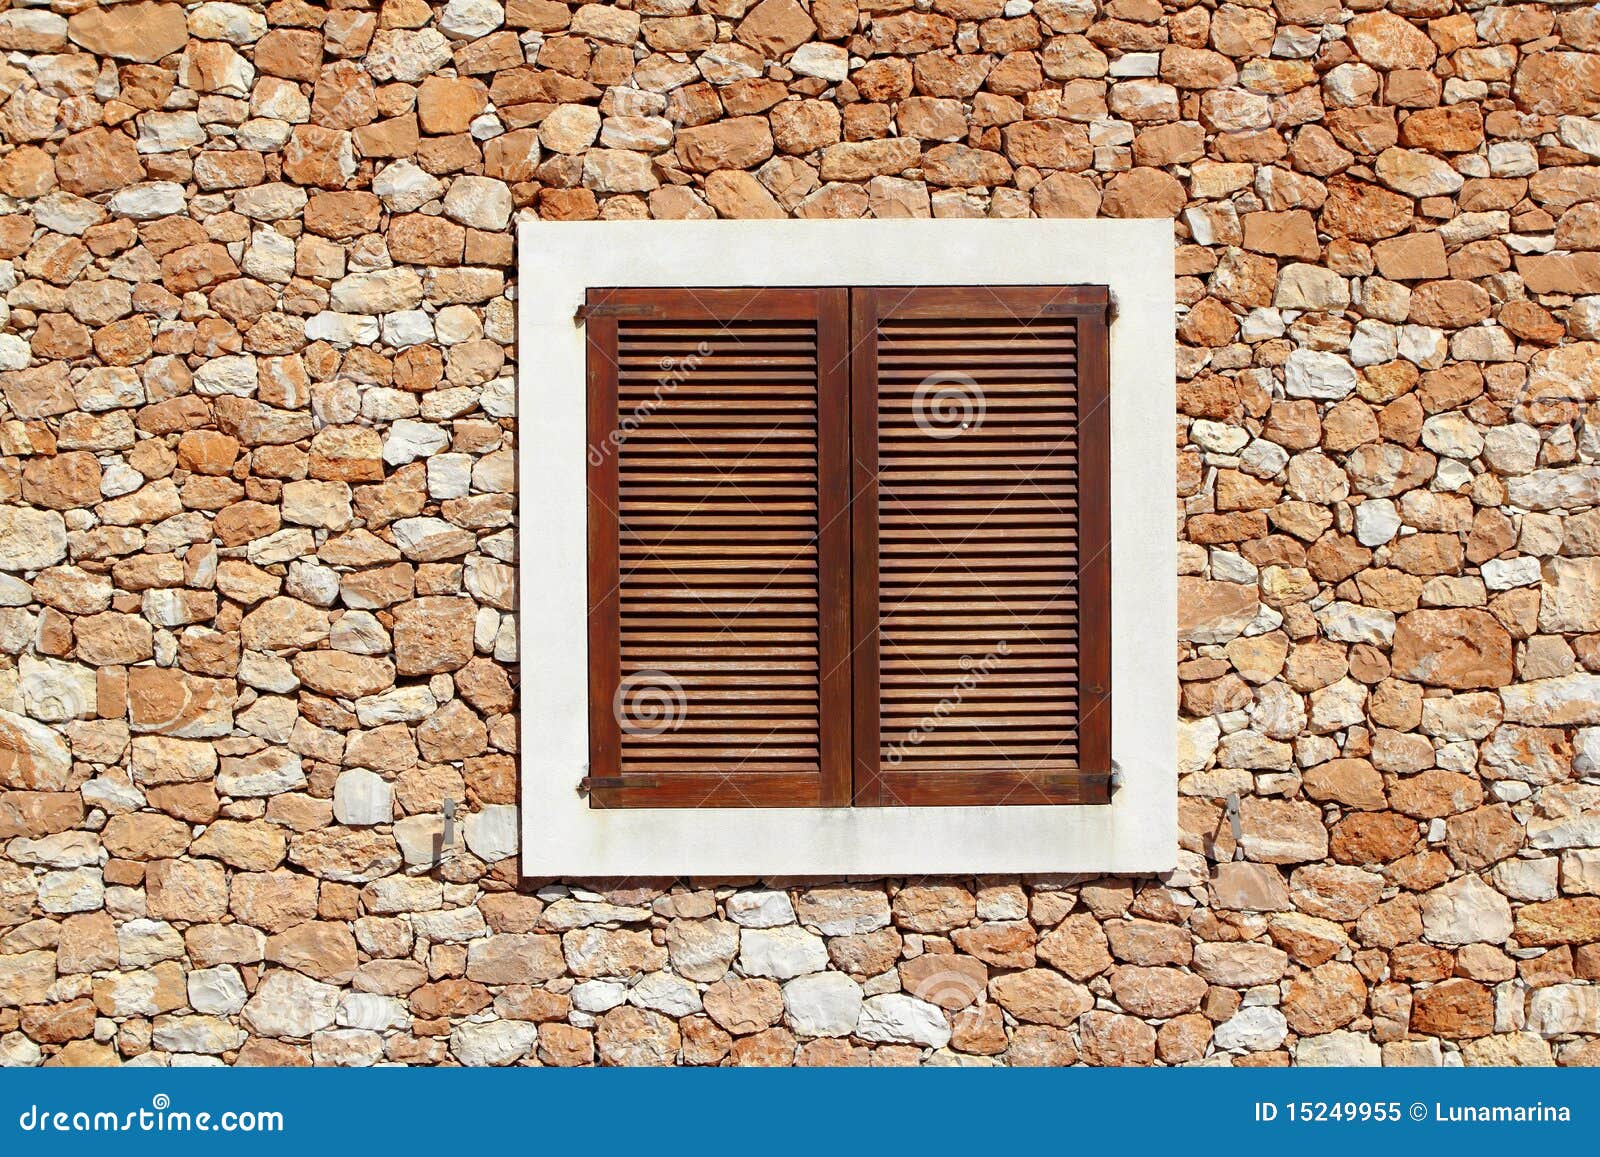 brown wooden window in masonry wall